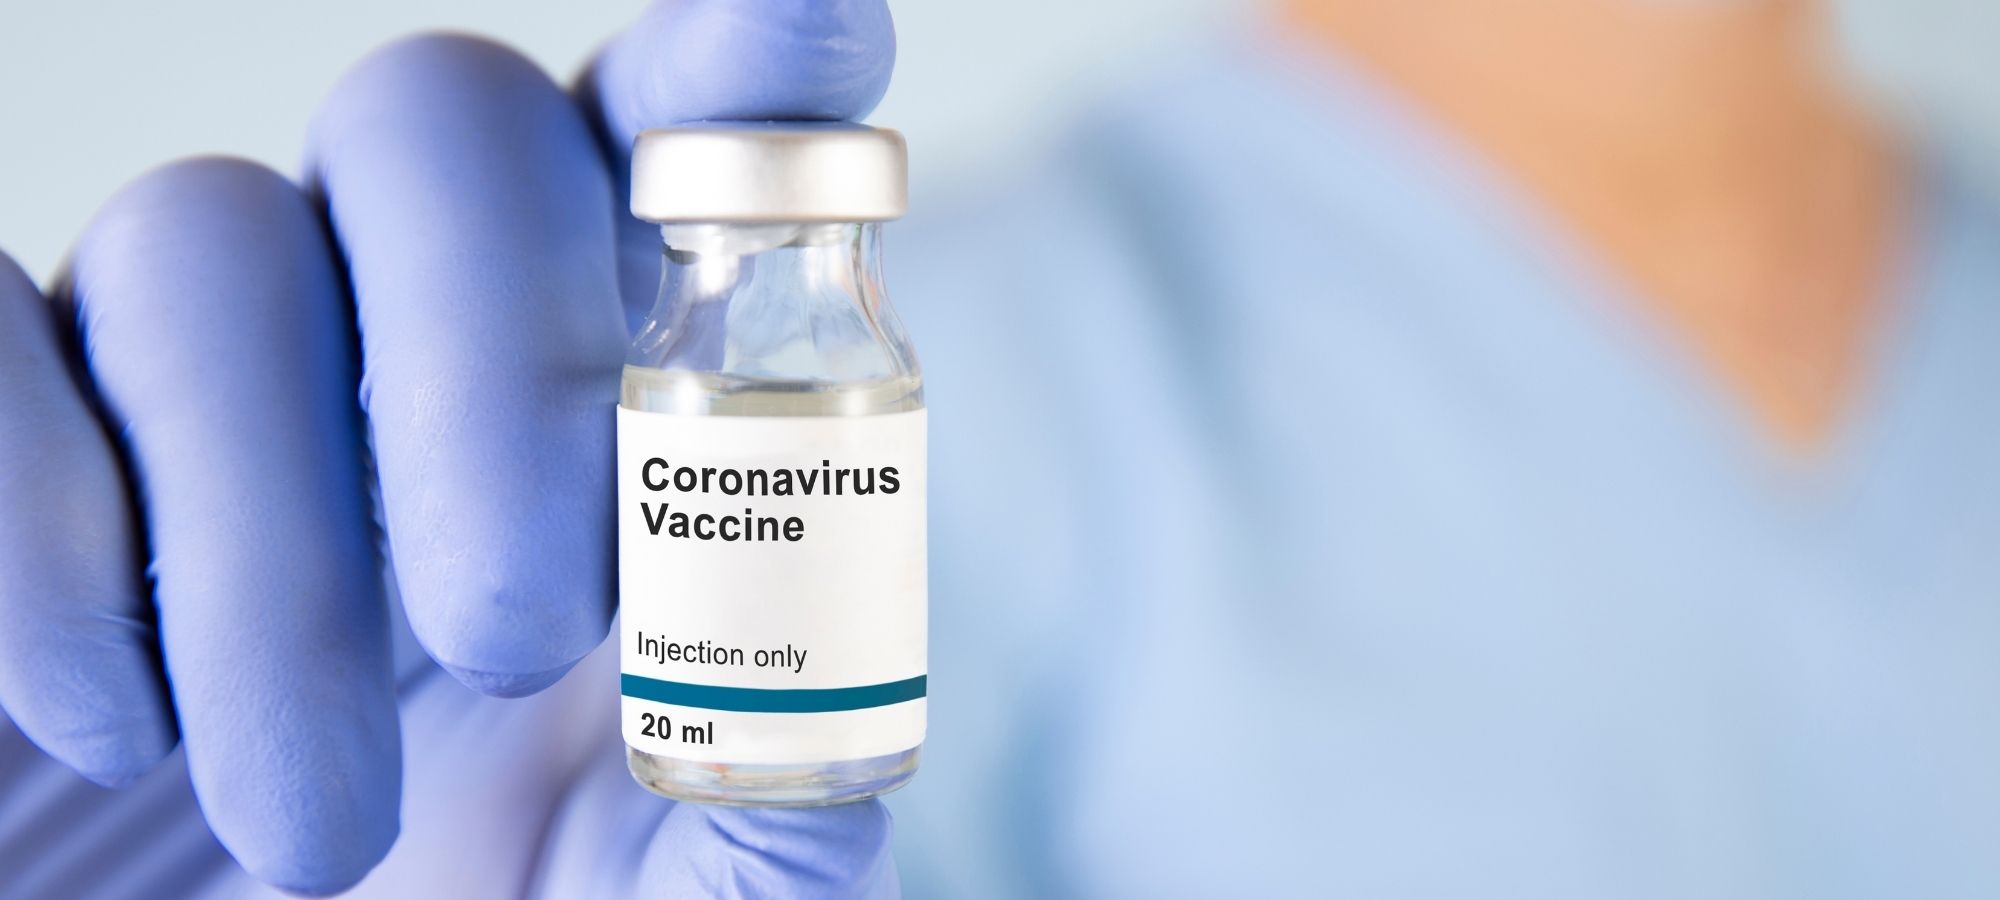 covid-19 vaccines leicester nuneaton